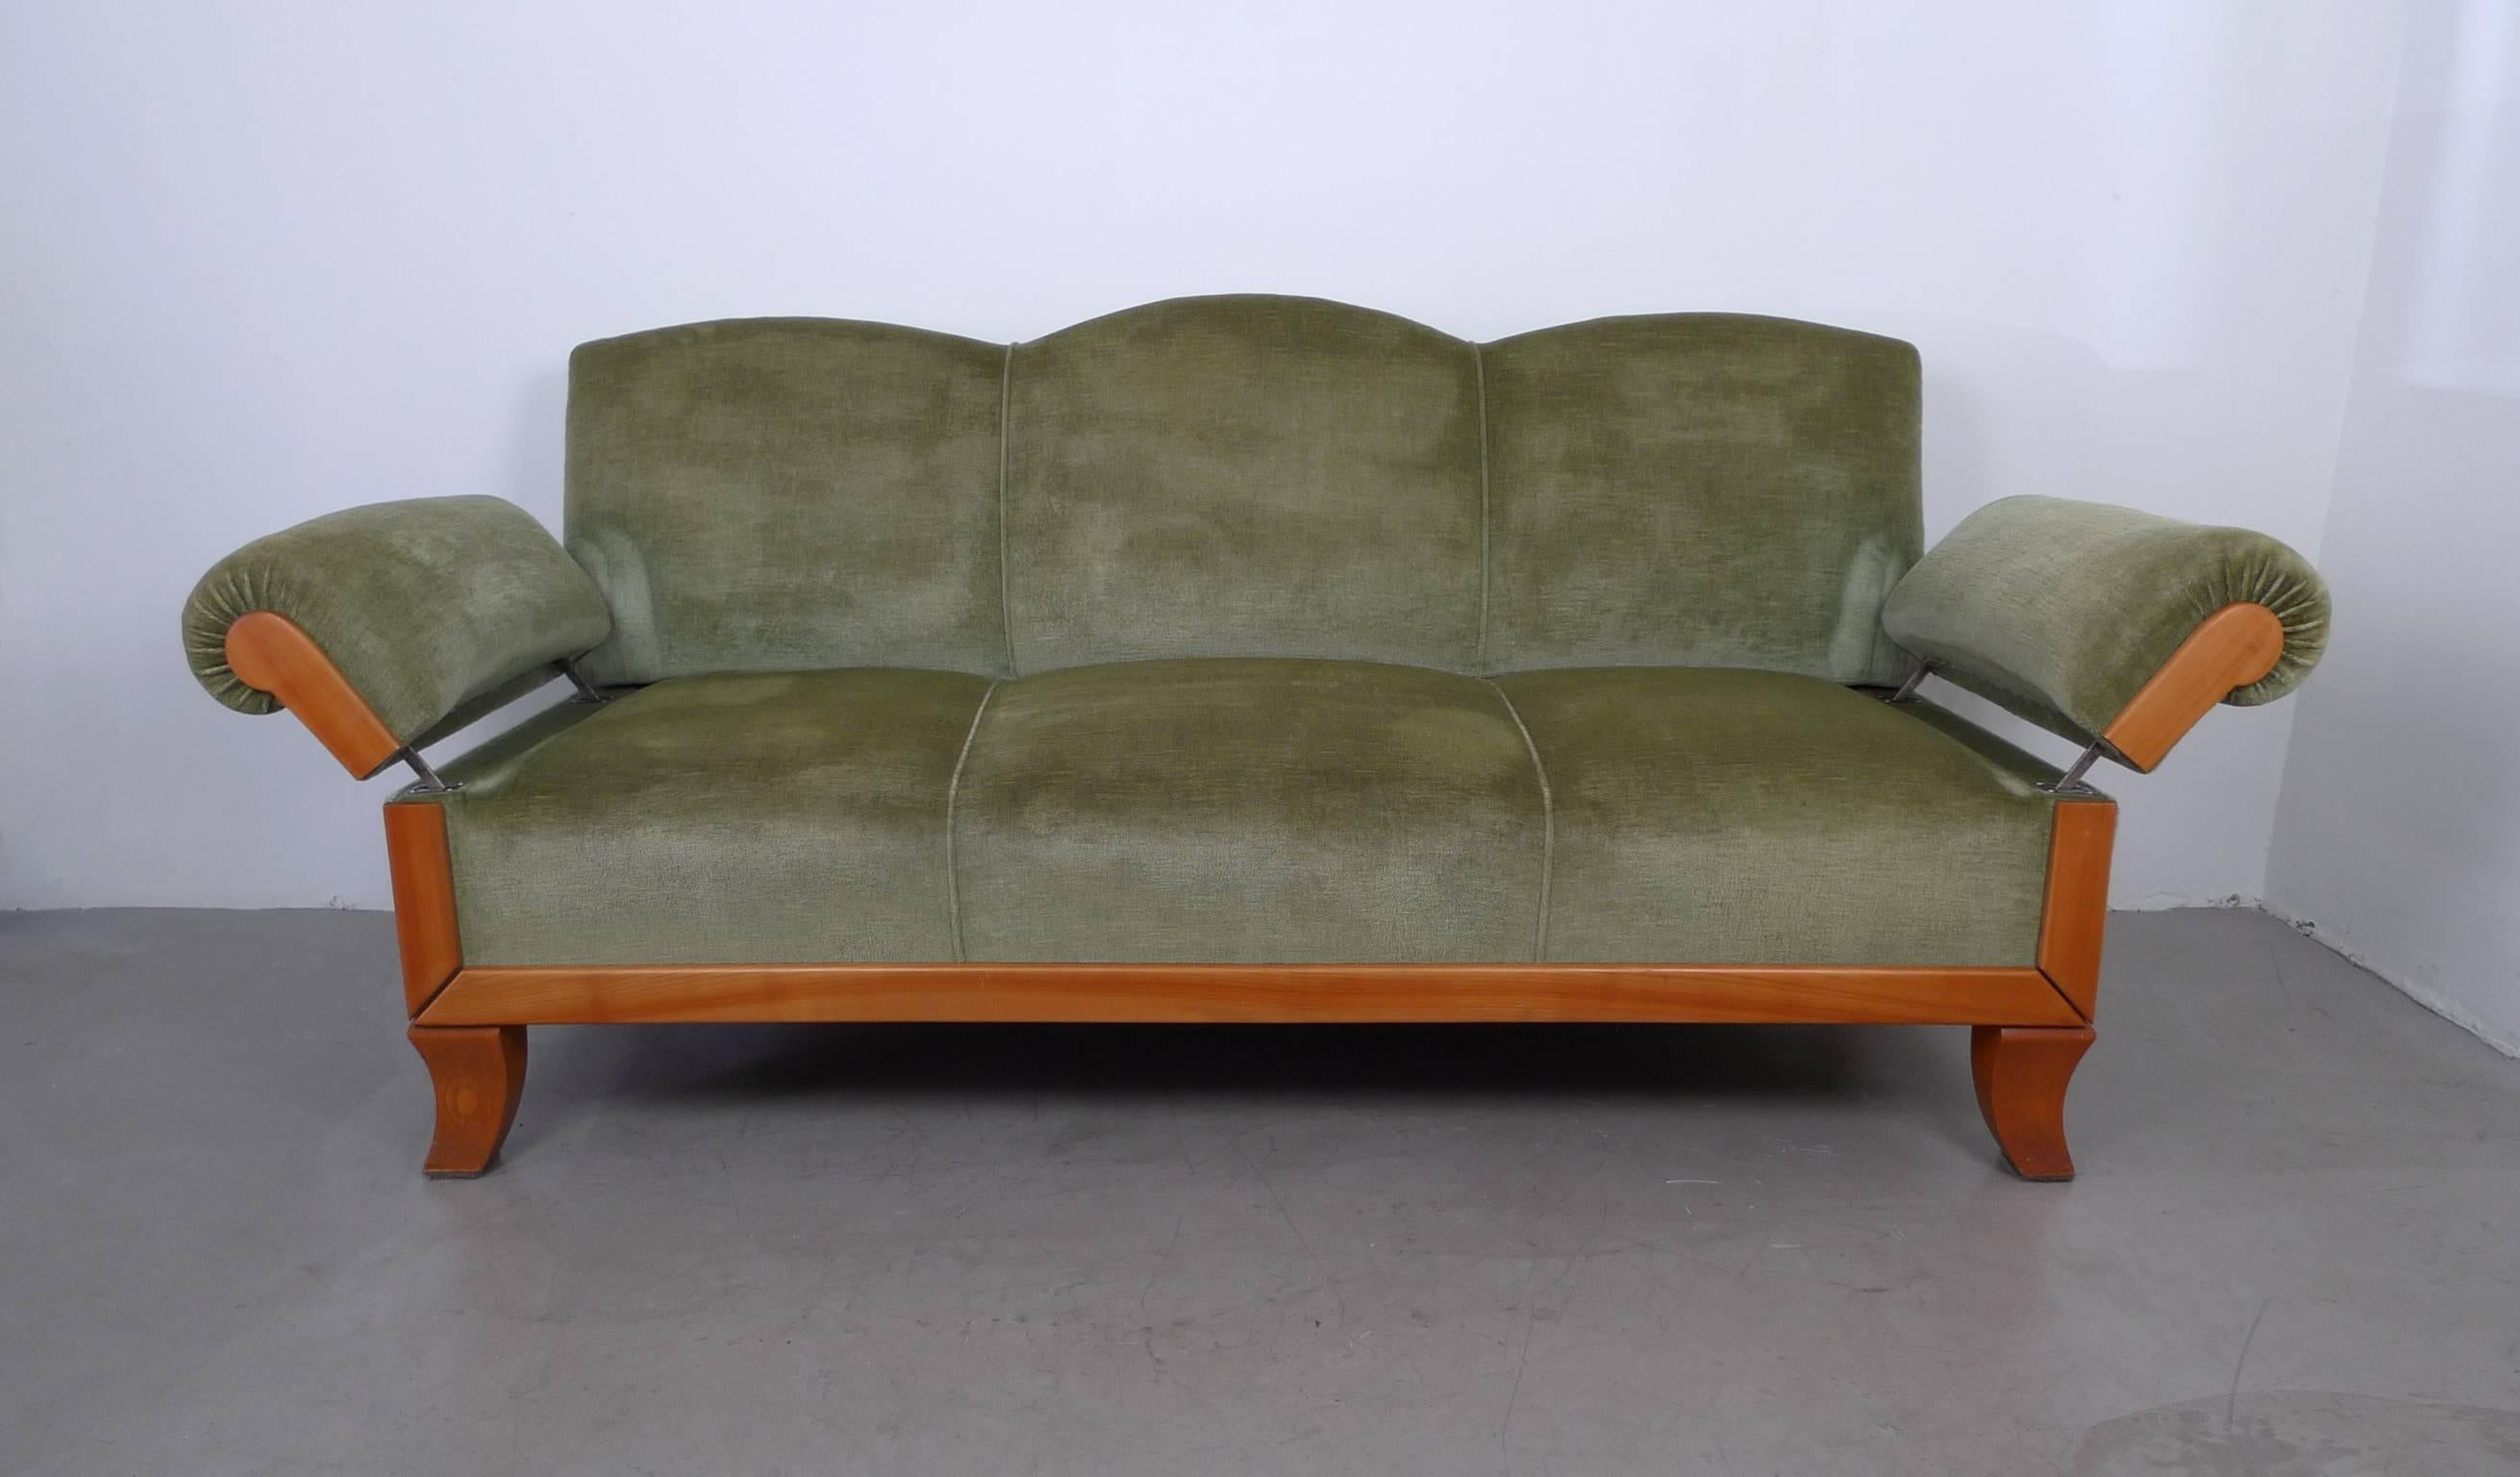 20th Century Three-Seat Cherry Framed Sofa from Germany, 1930s